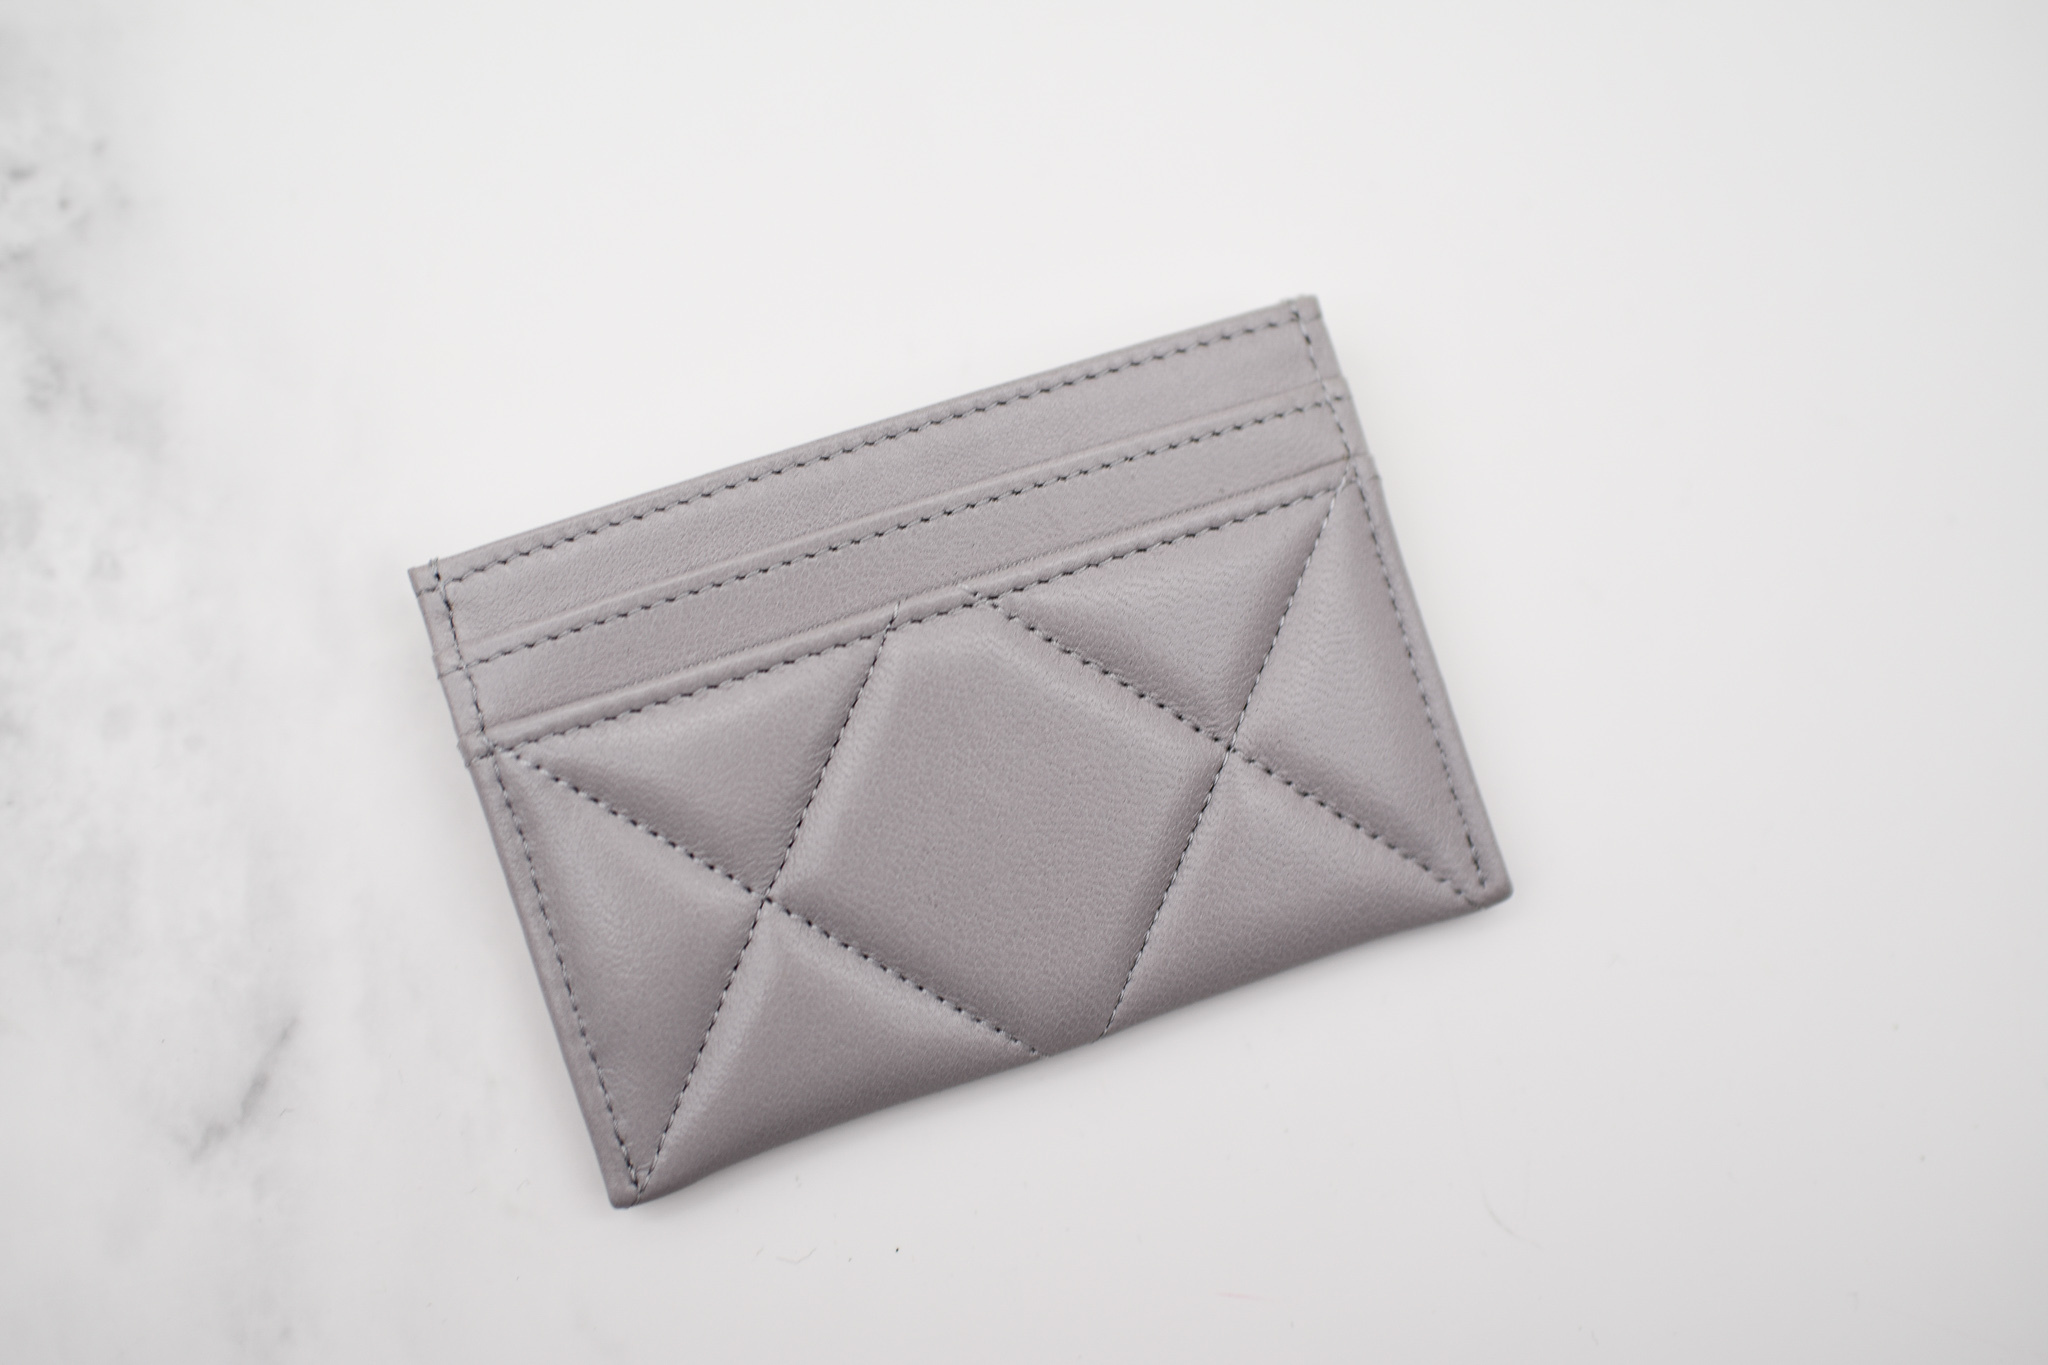 Chanel 19 SLG Flat Cardholder, Gray Lambskin Leather, Silver